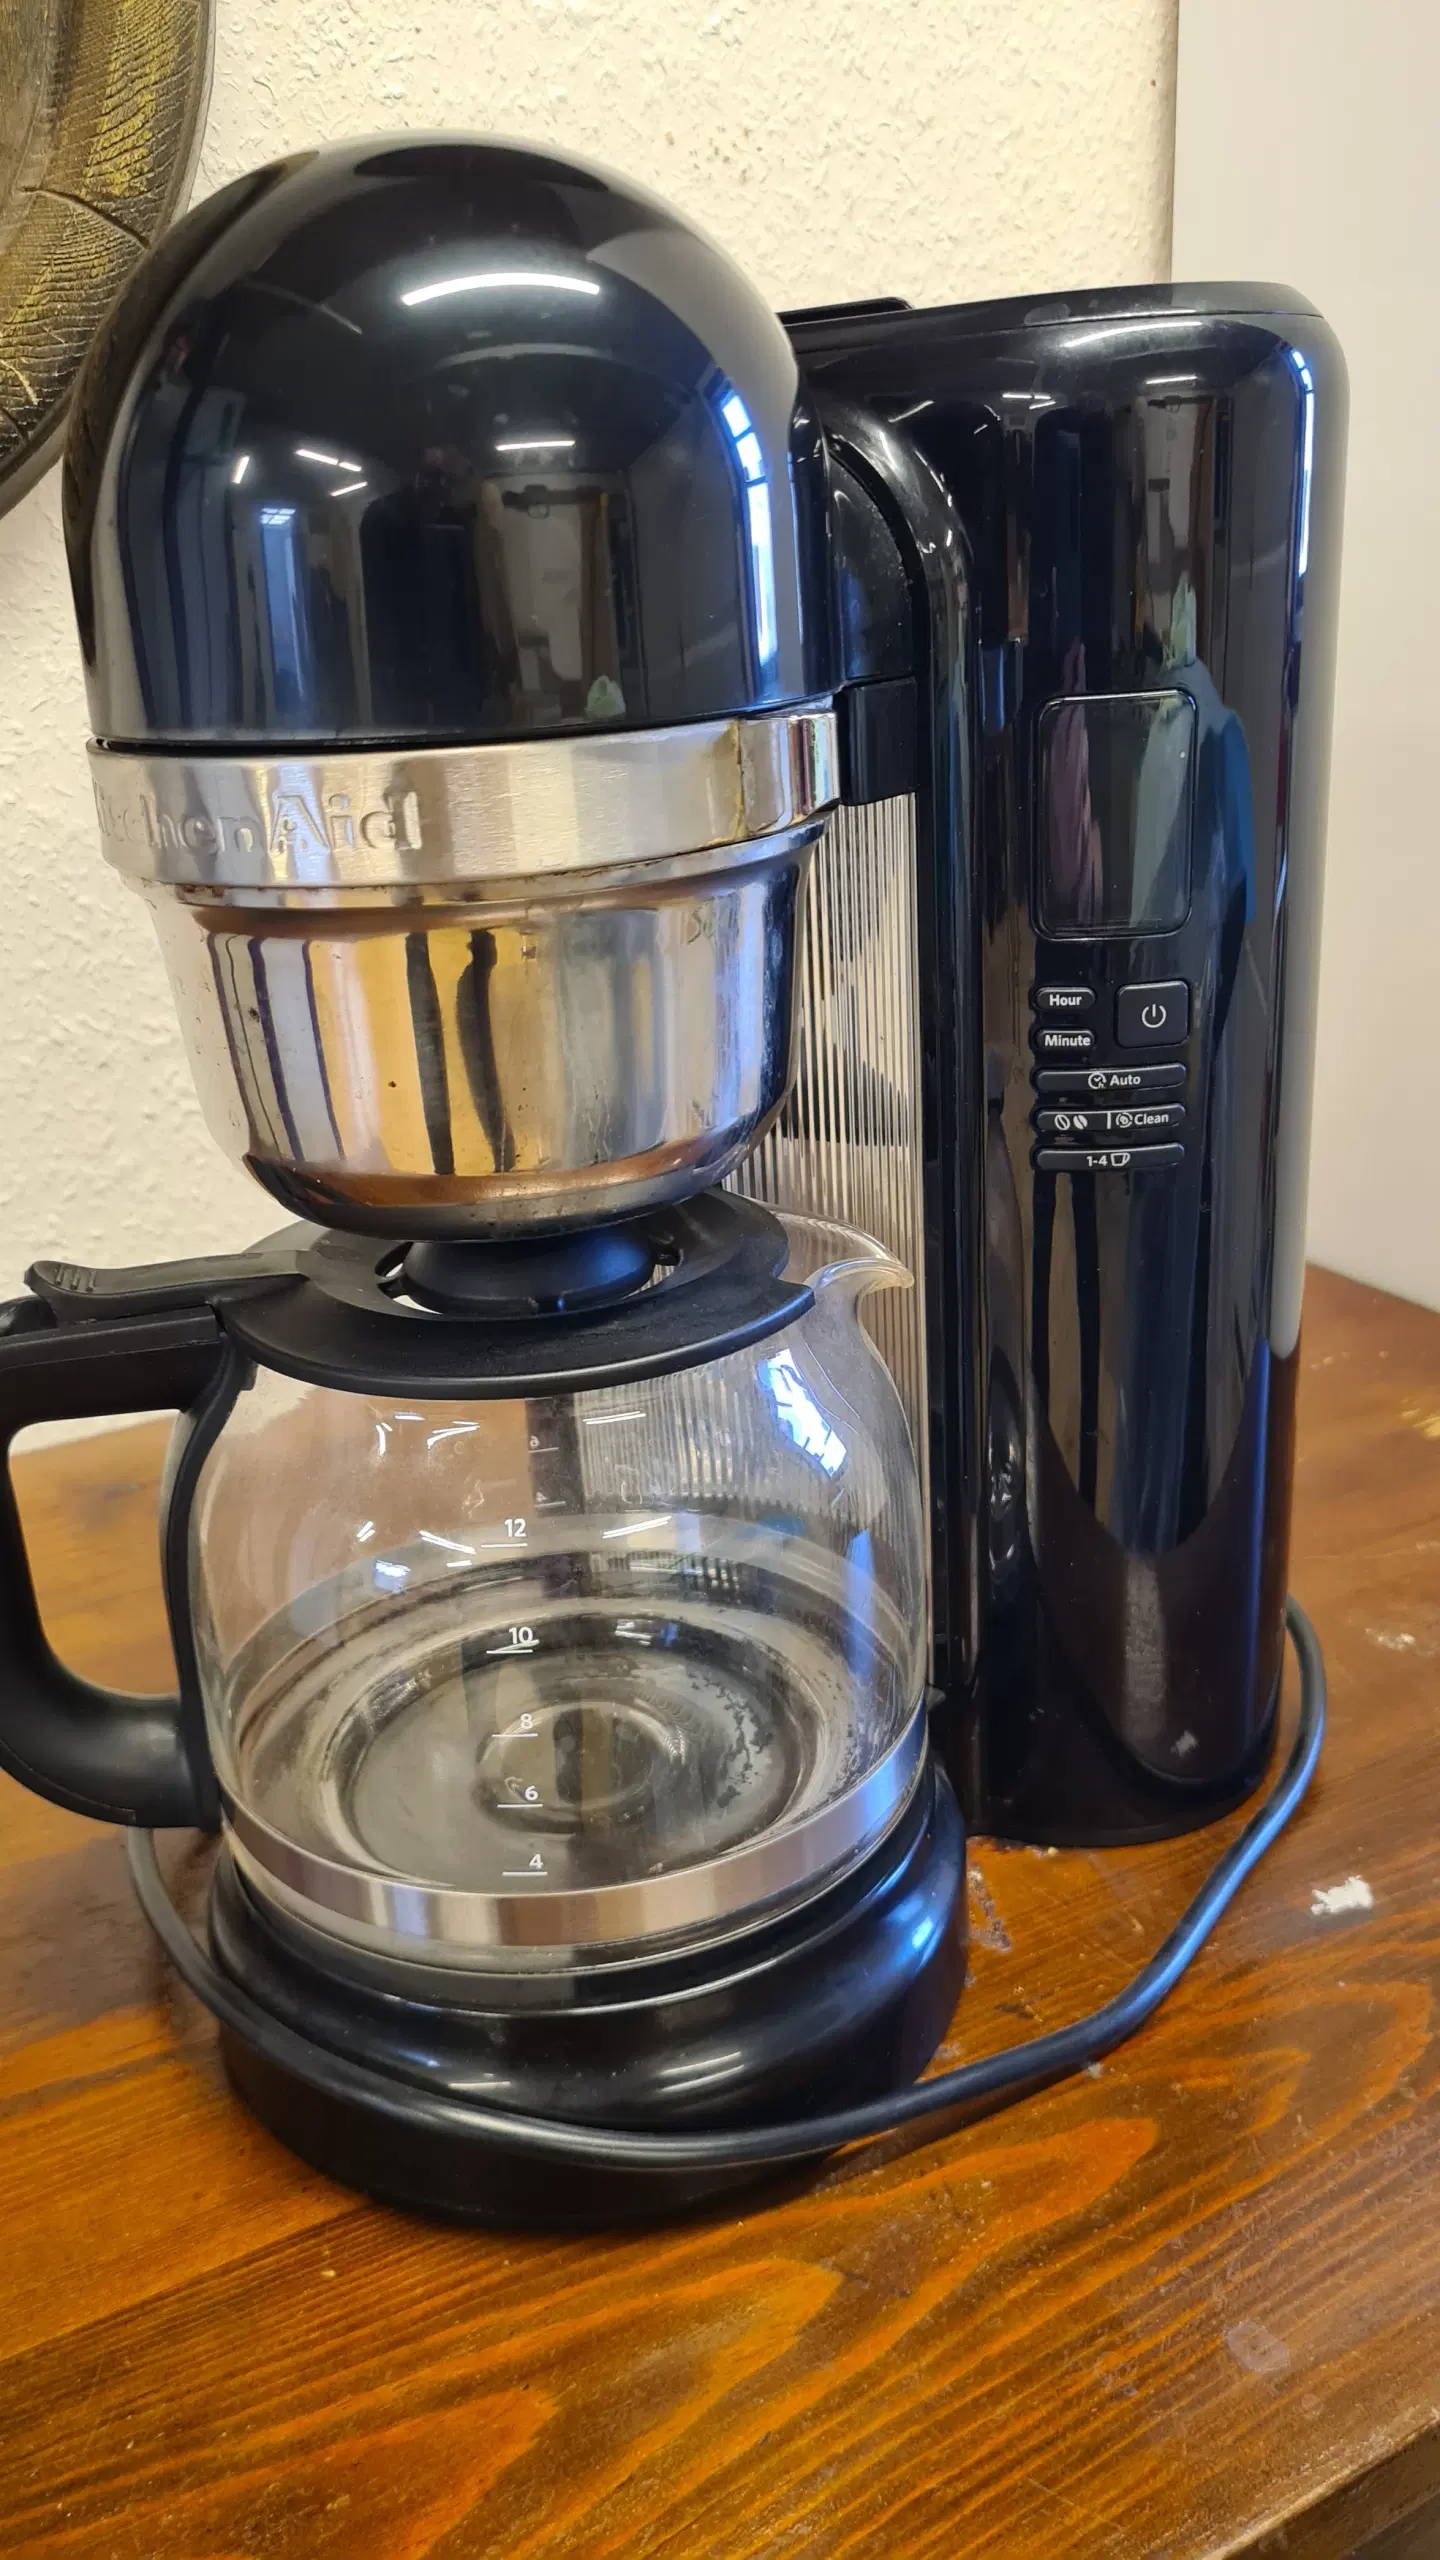 Kitchen Aid kaffemaskine